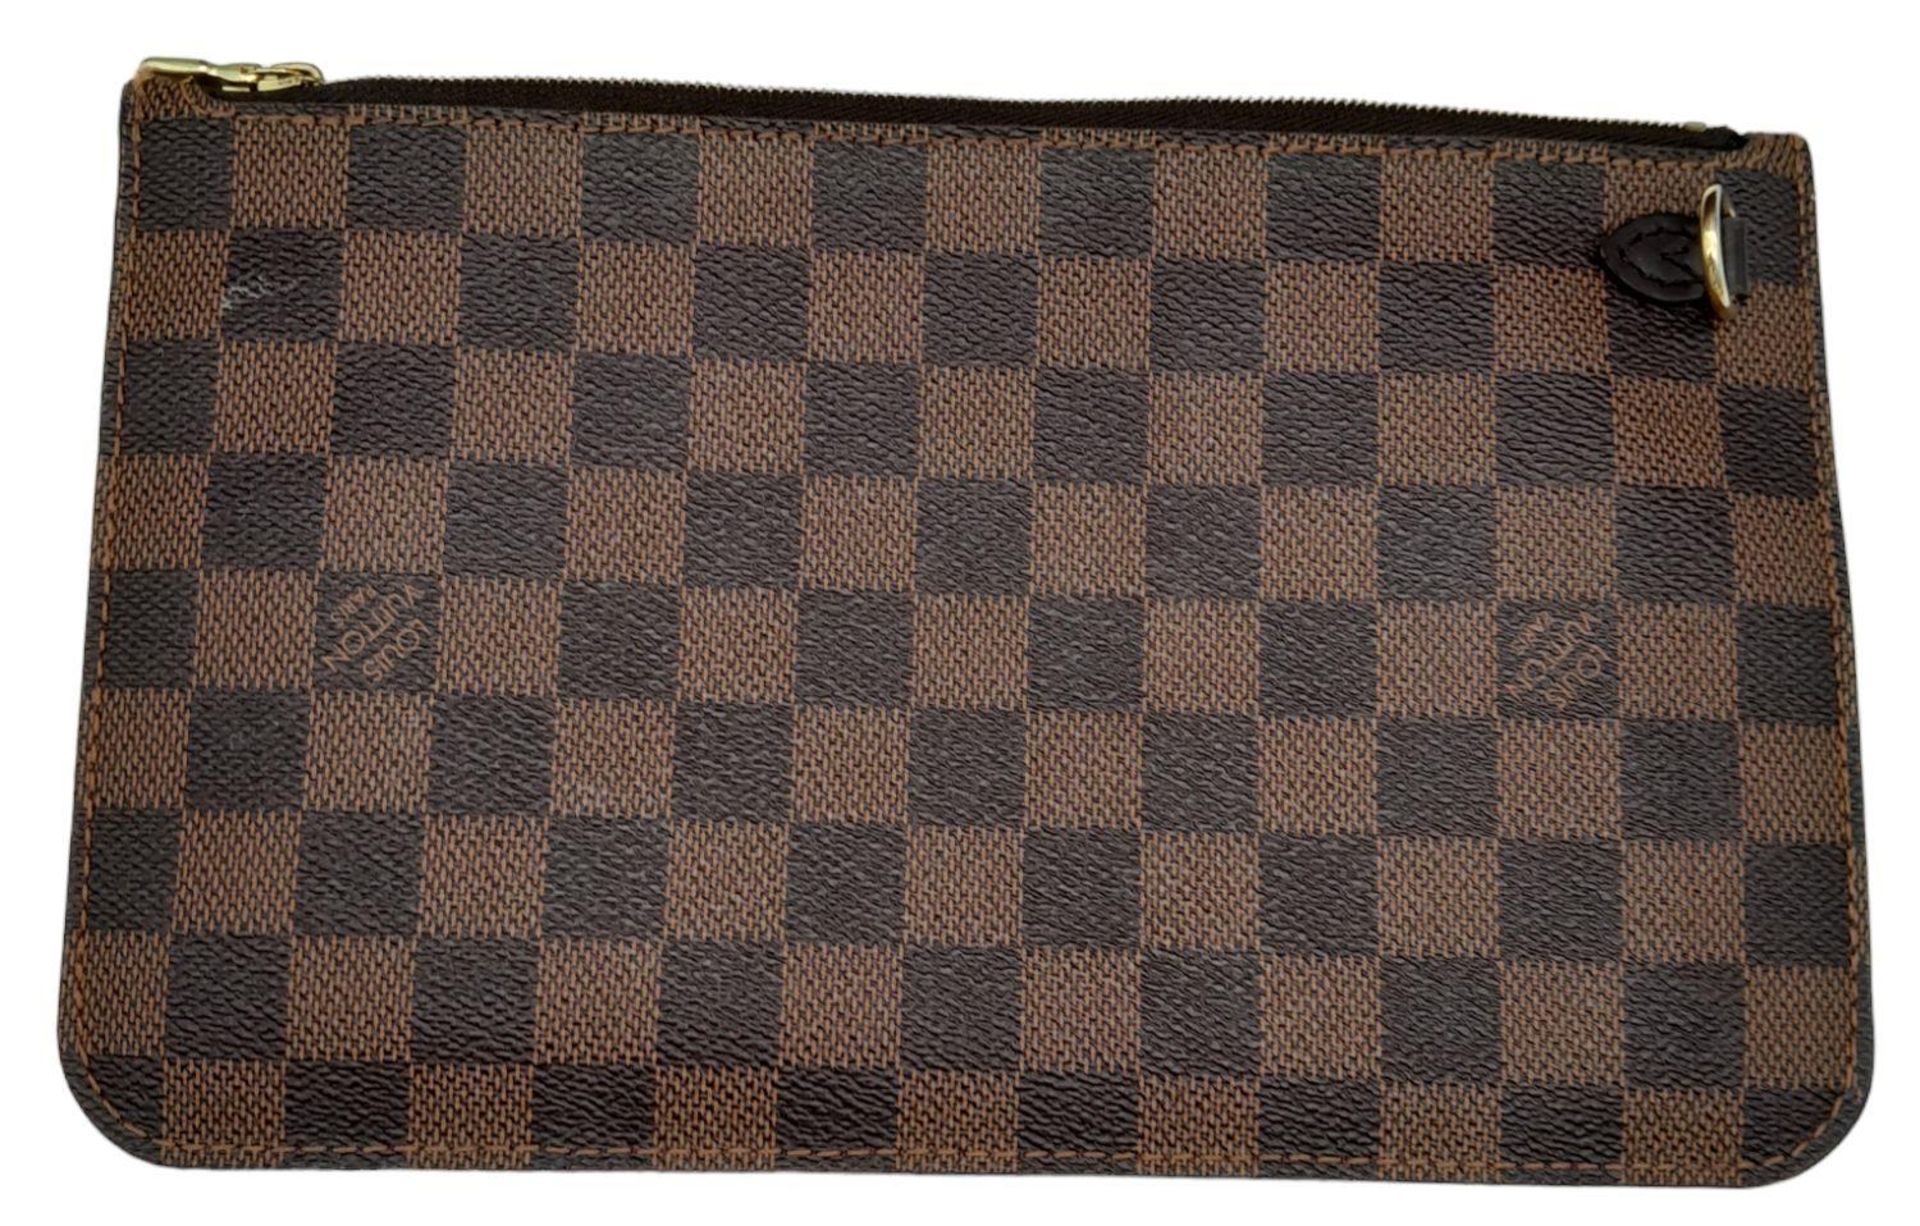 A Louis Vuitton Neverfull Damier Ebene Bag. Coated canvas exterior with leather trim, gold-toned - Bild 3 aus 12